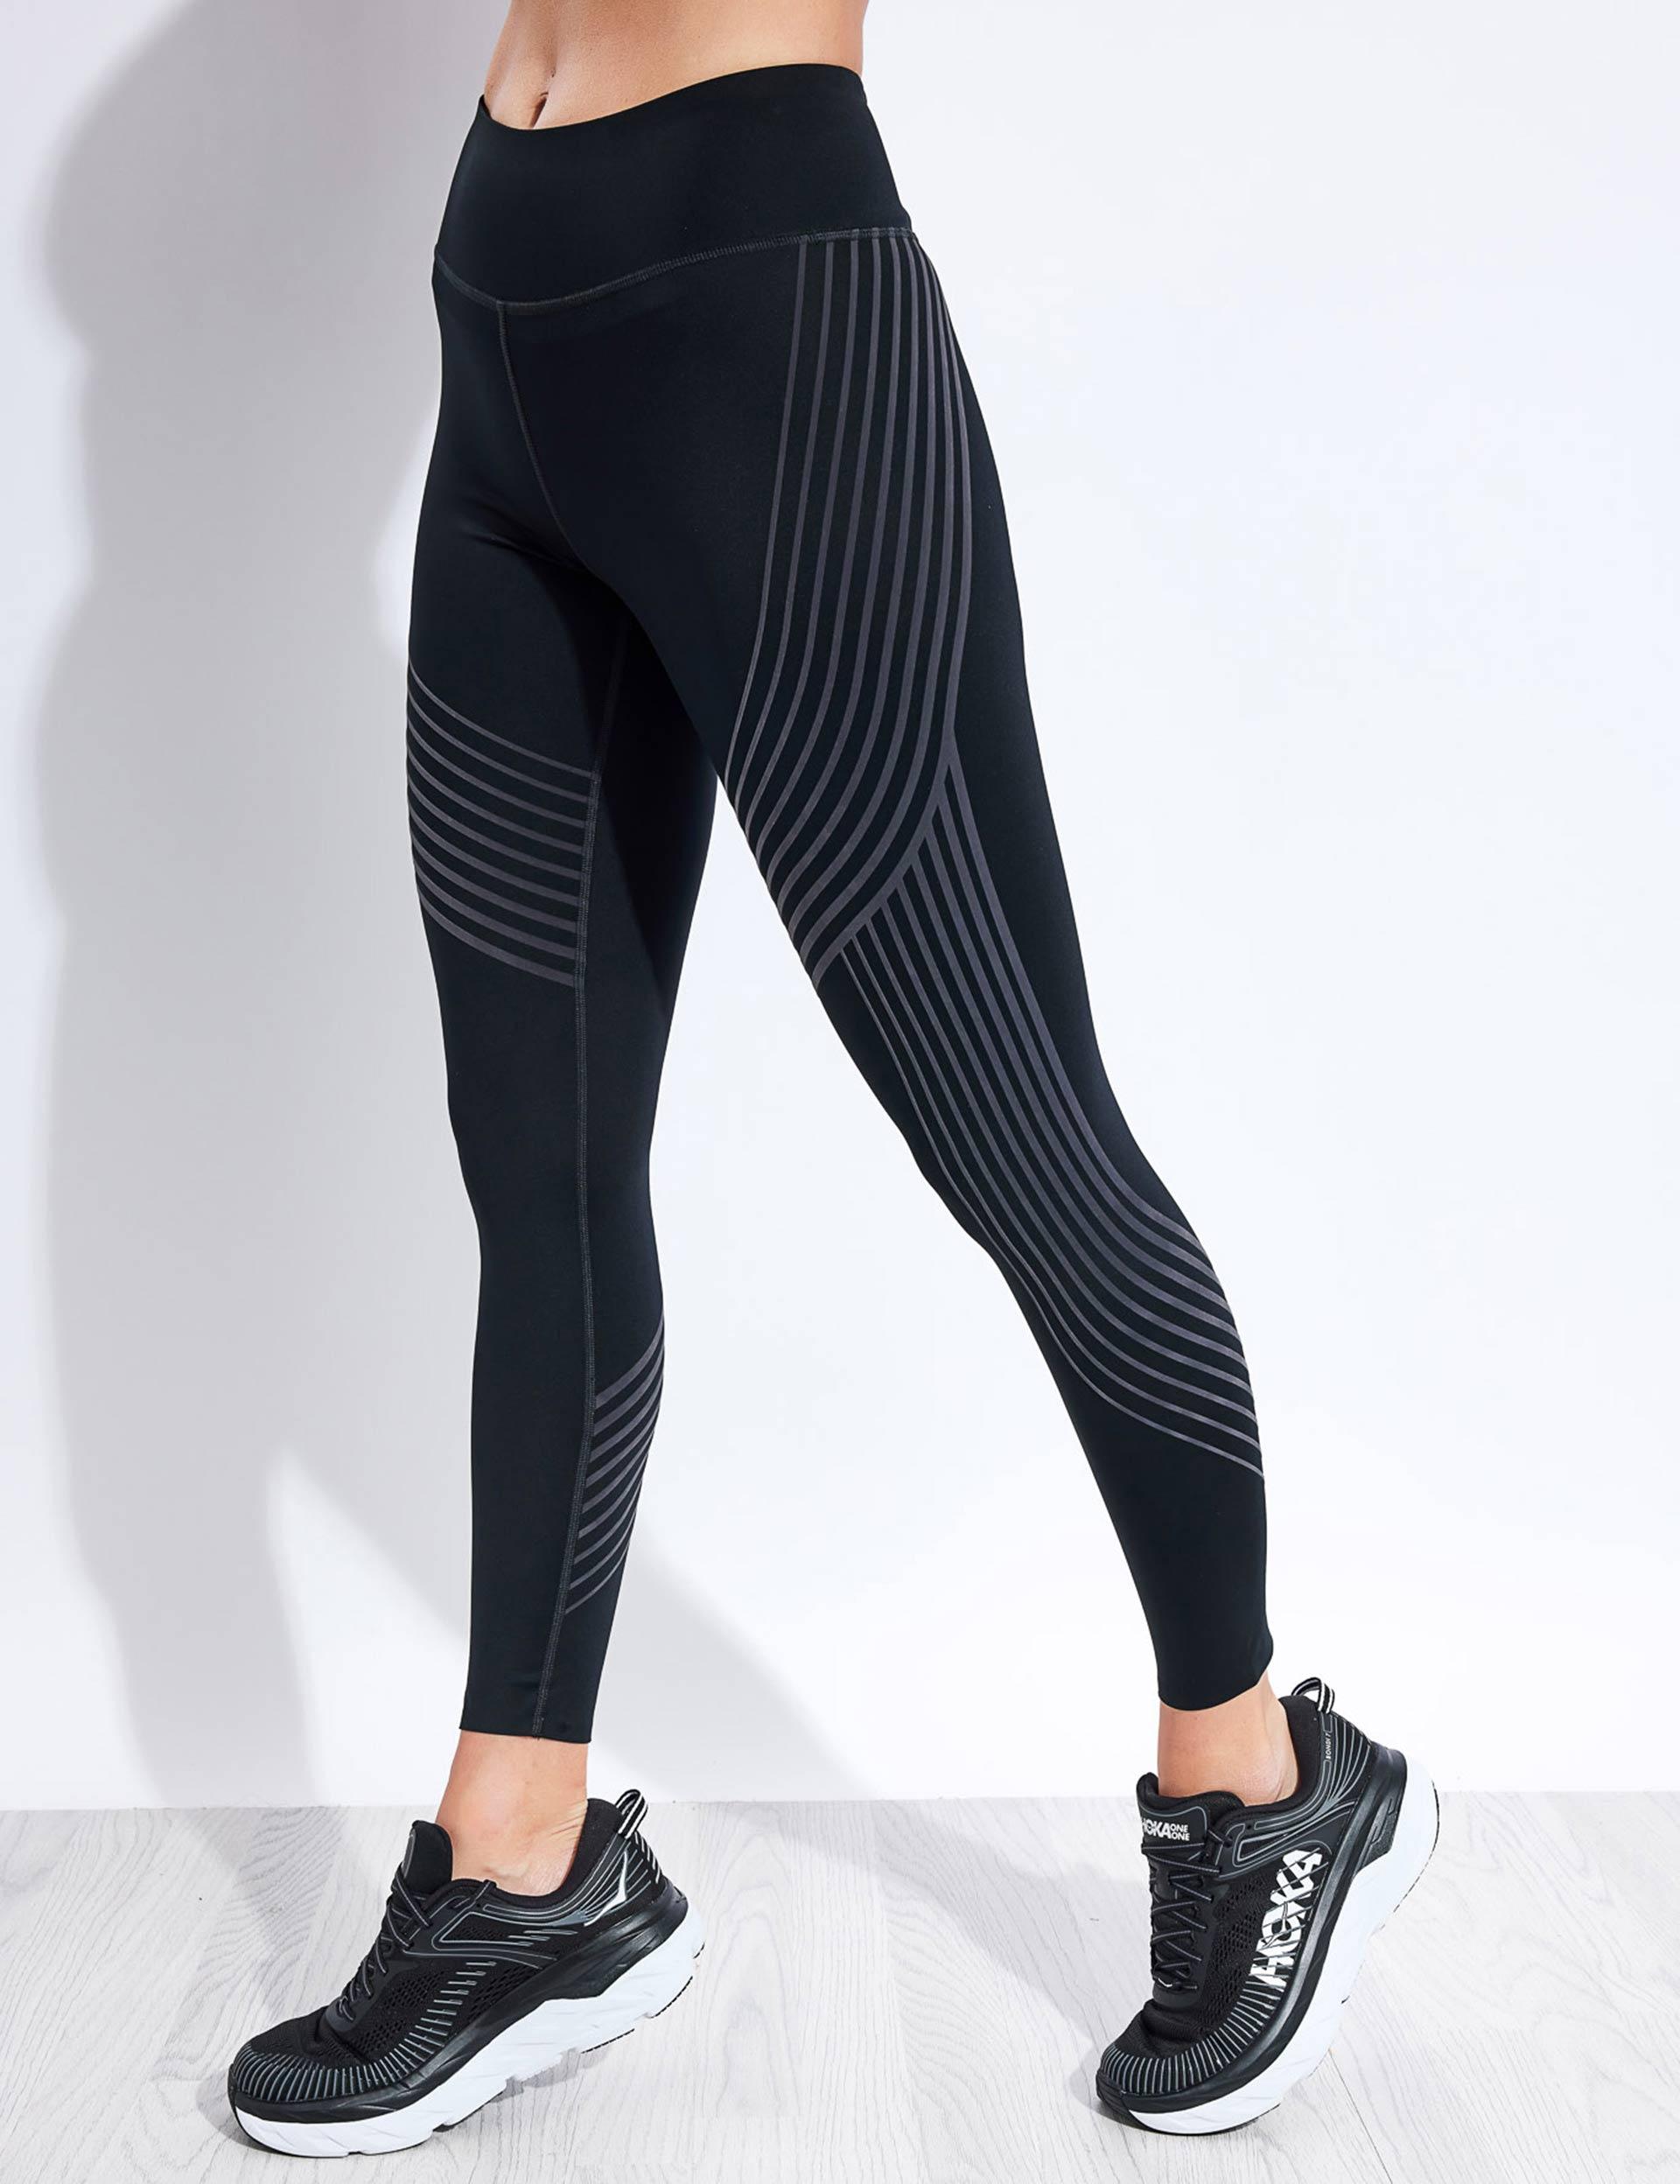 https://cdna.lystit.com/photos/thesportsedit/15437cfc/goodmove-Black-Go-Perform-Compression-Gym-leggings.jpeg